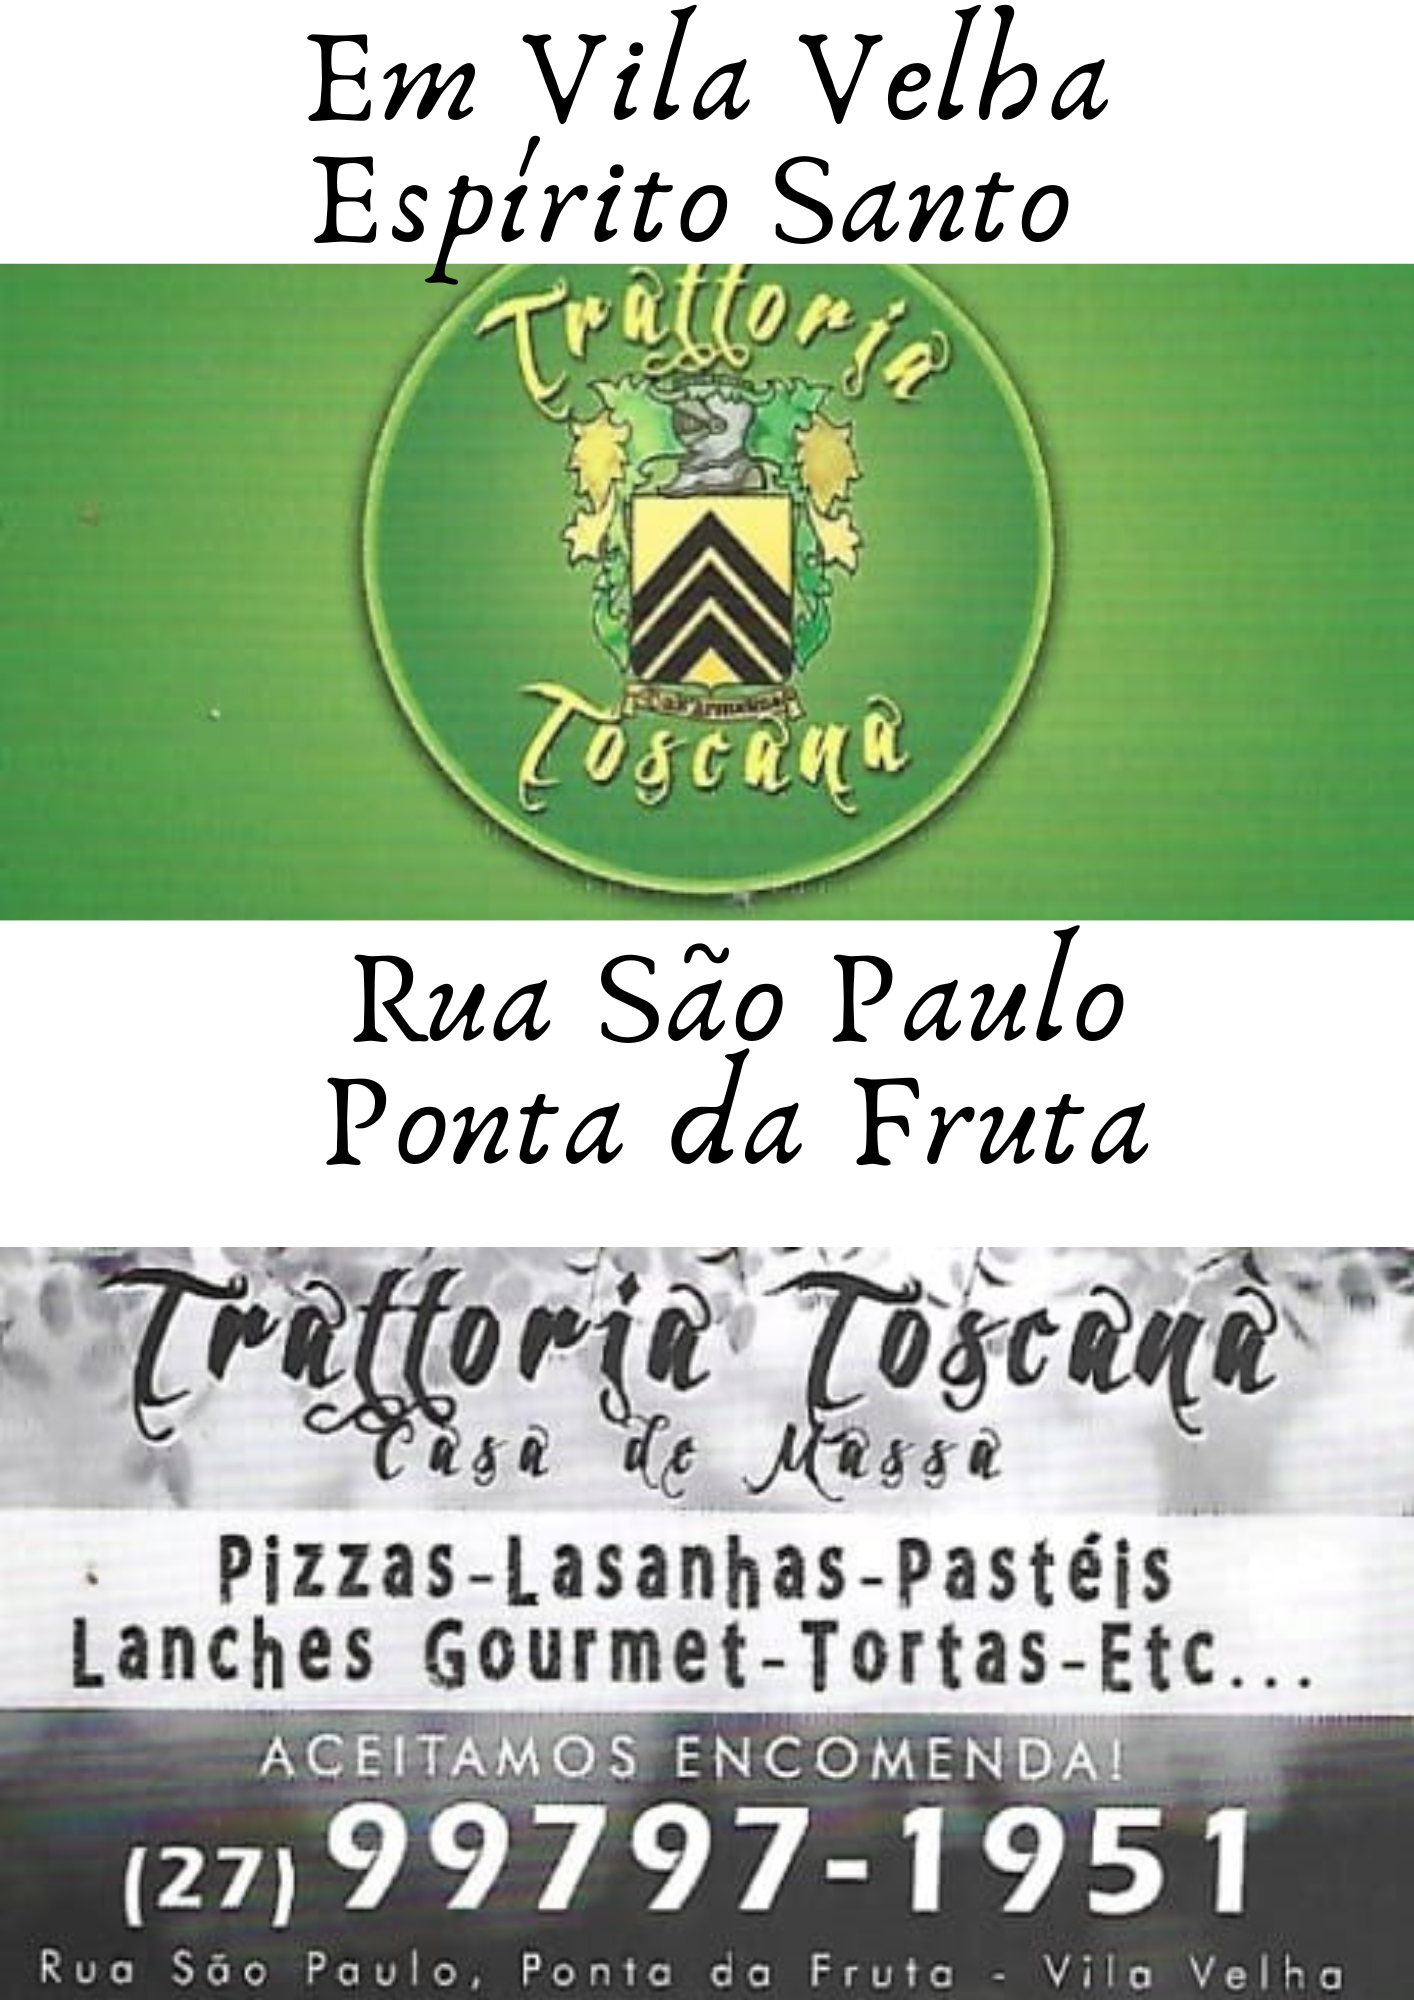 Trattoria Toscana - Vila Velha - Espírito Santo